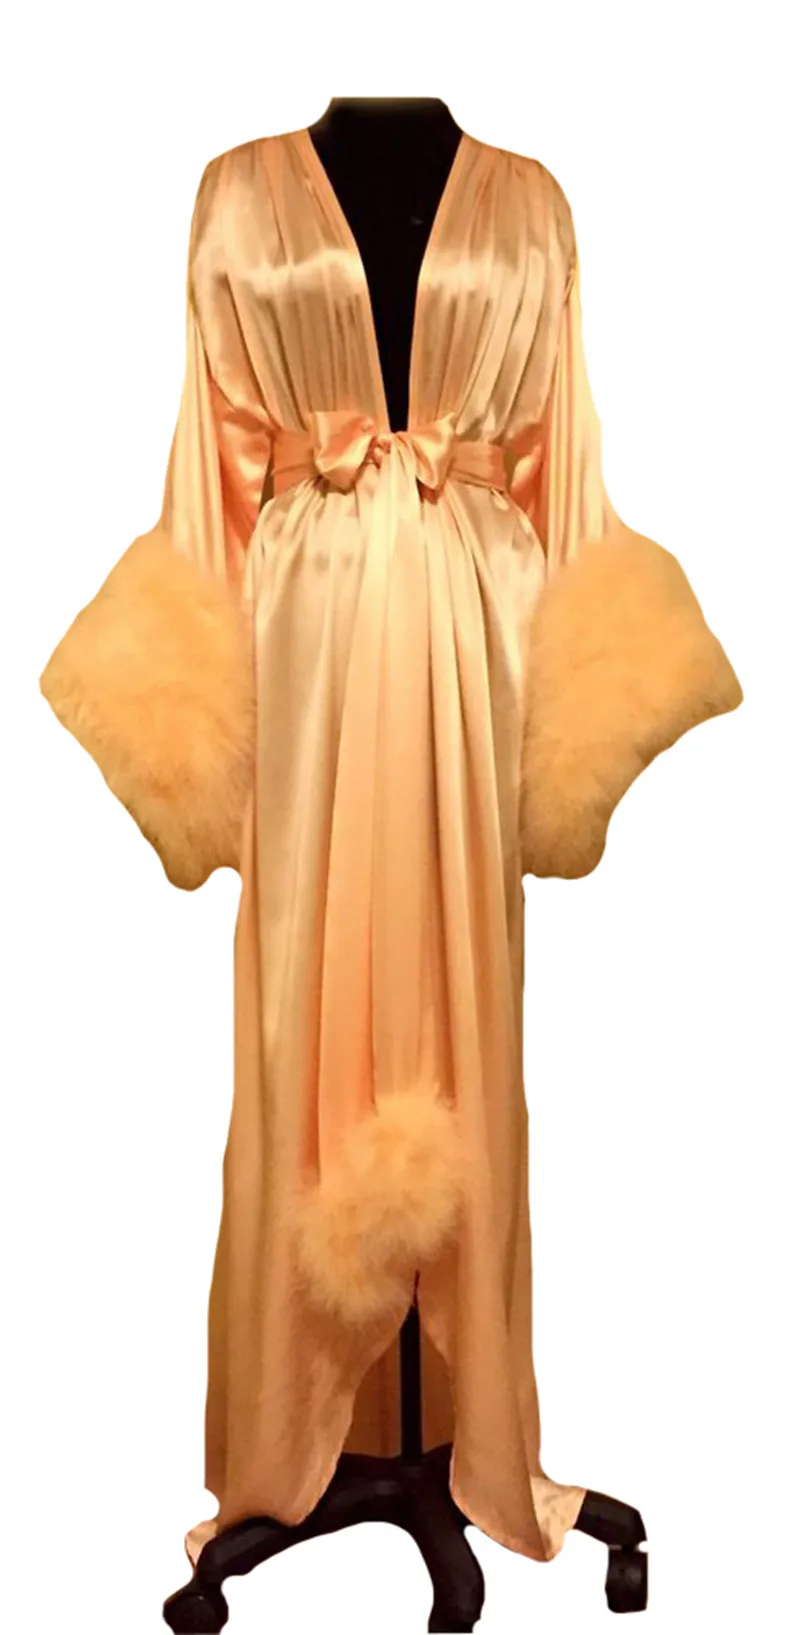 Fashion Fur Robes Women Long Bathrobe Dresses Photo Shoot Birthday Party Bridal Fluffy Party Sleepwear Custom Made Gown 2021